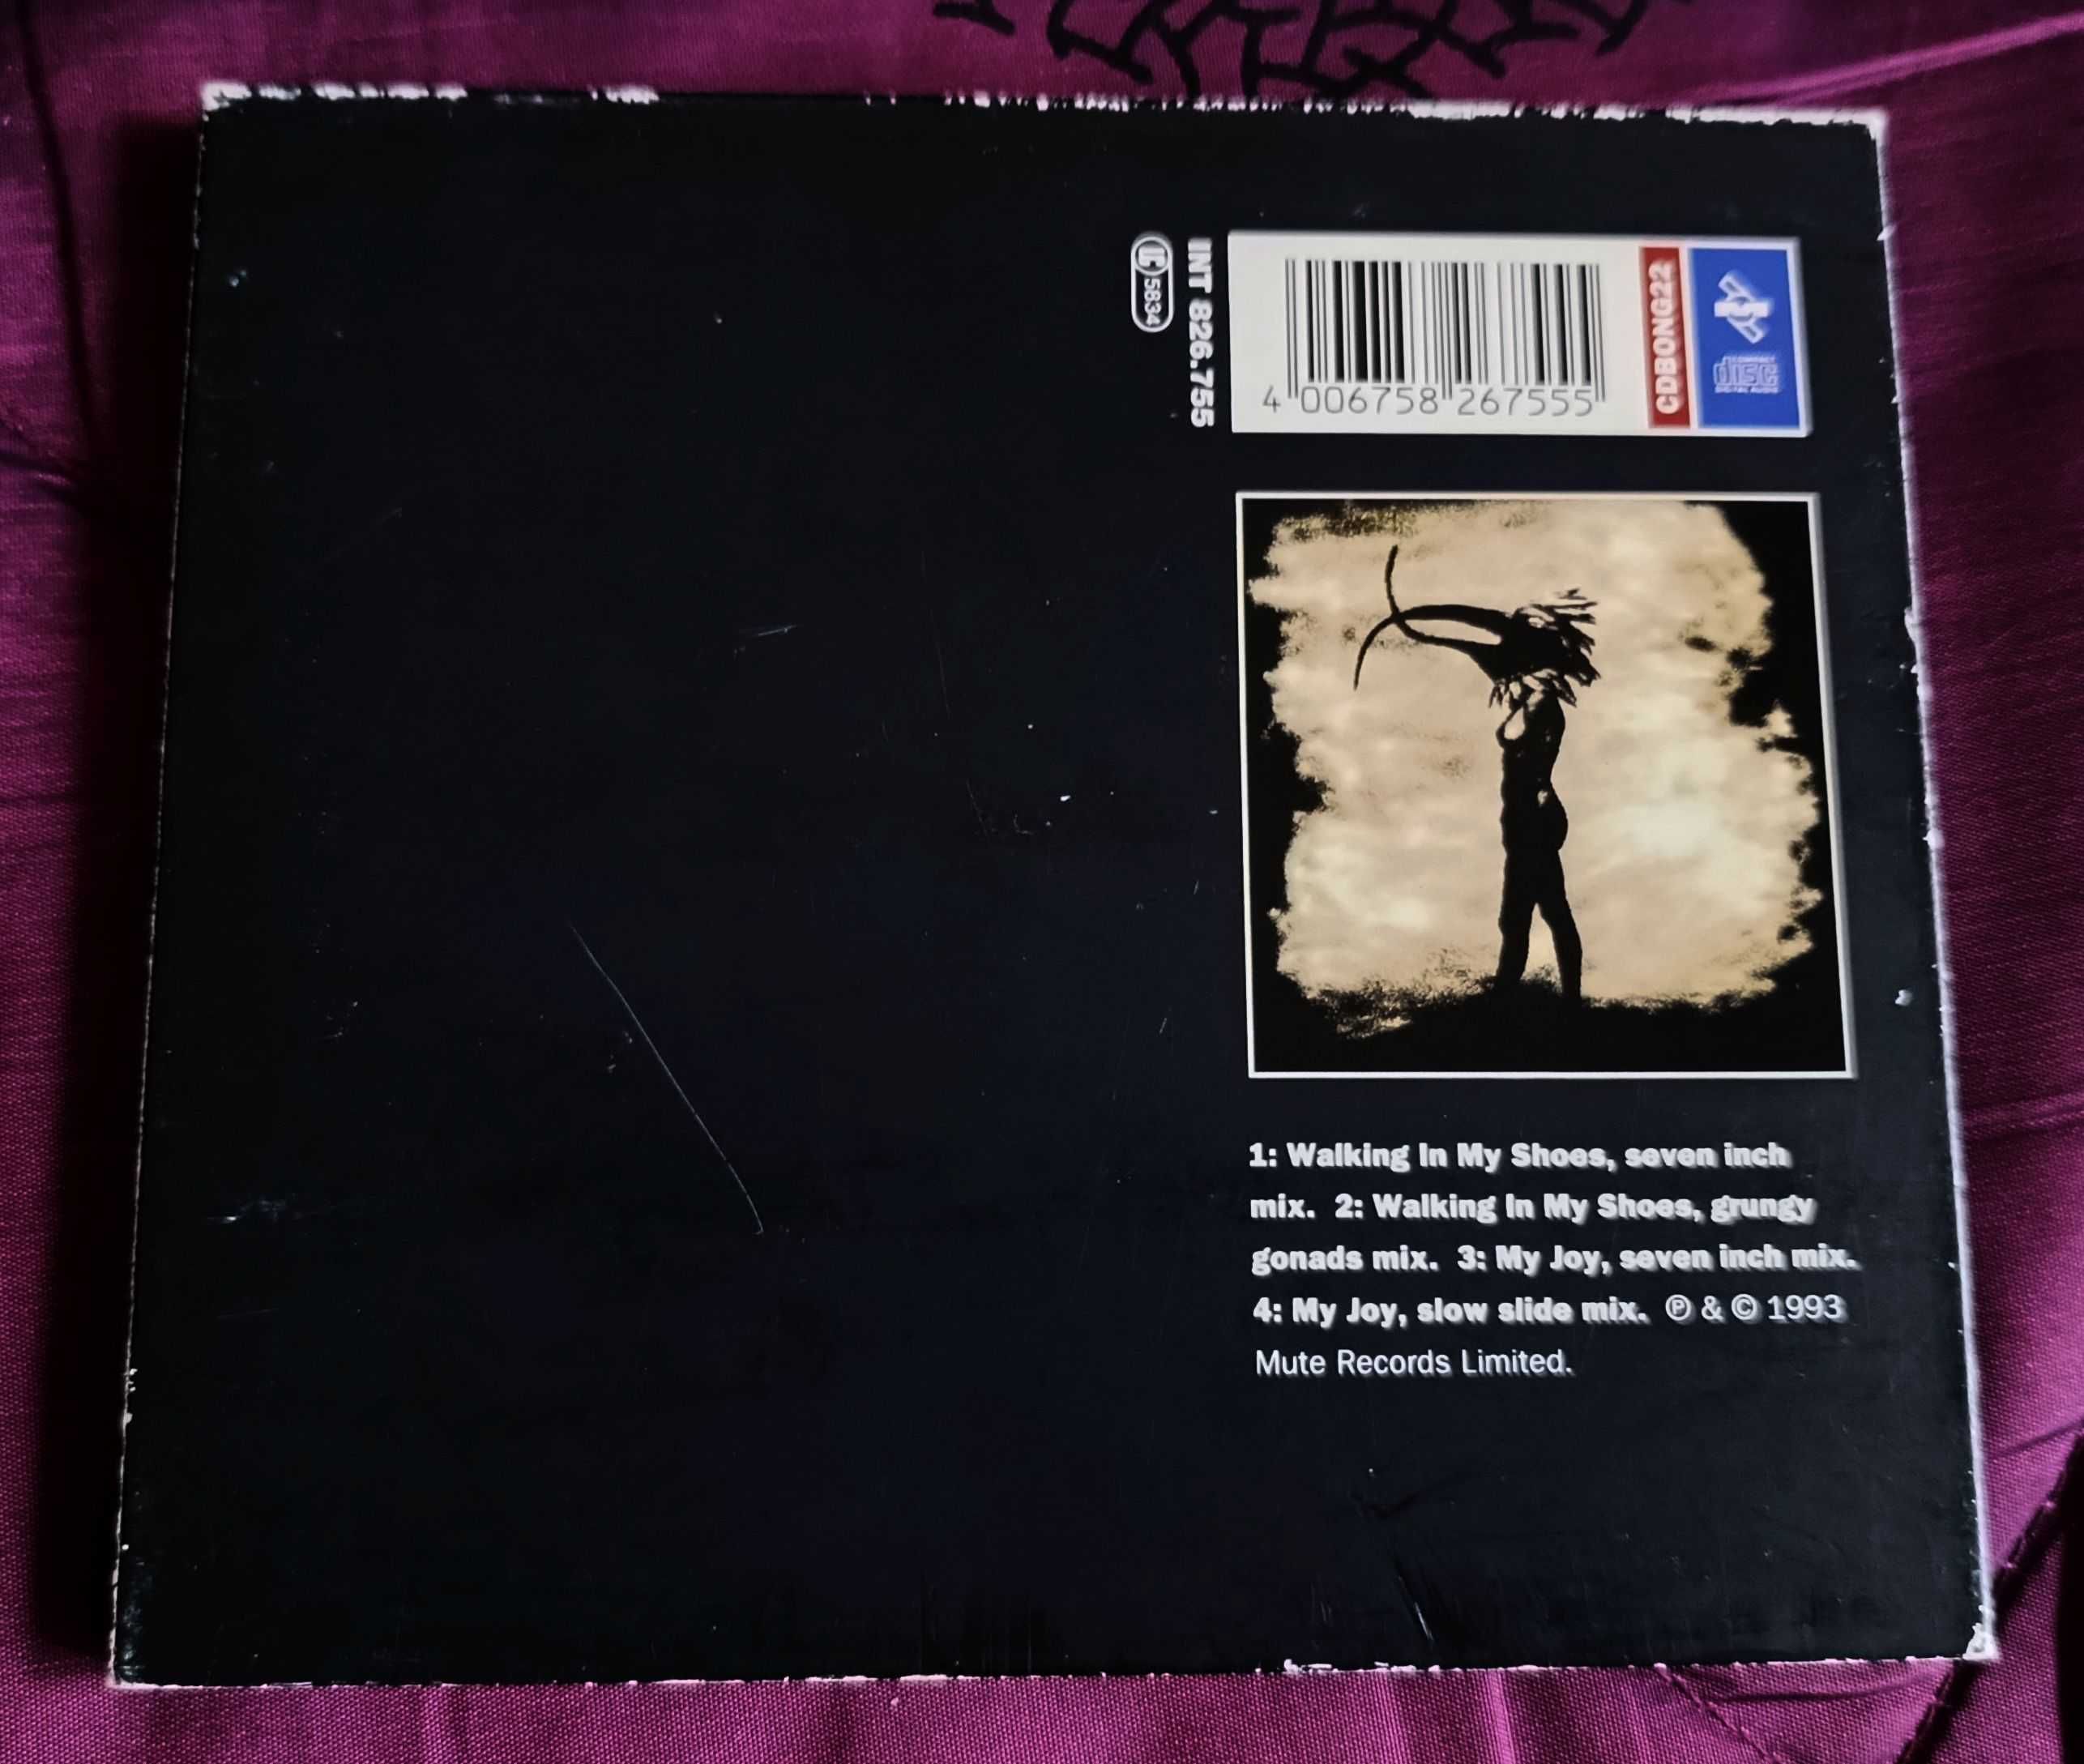 Depeche mode - CD maxi sp